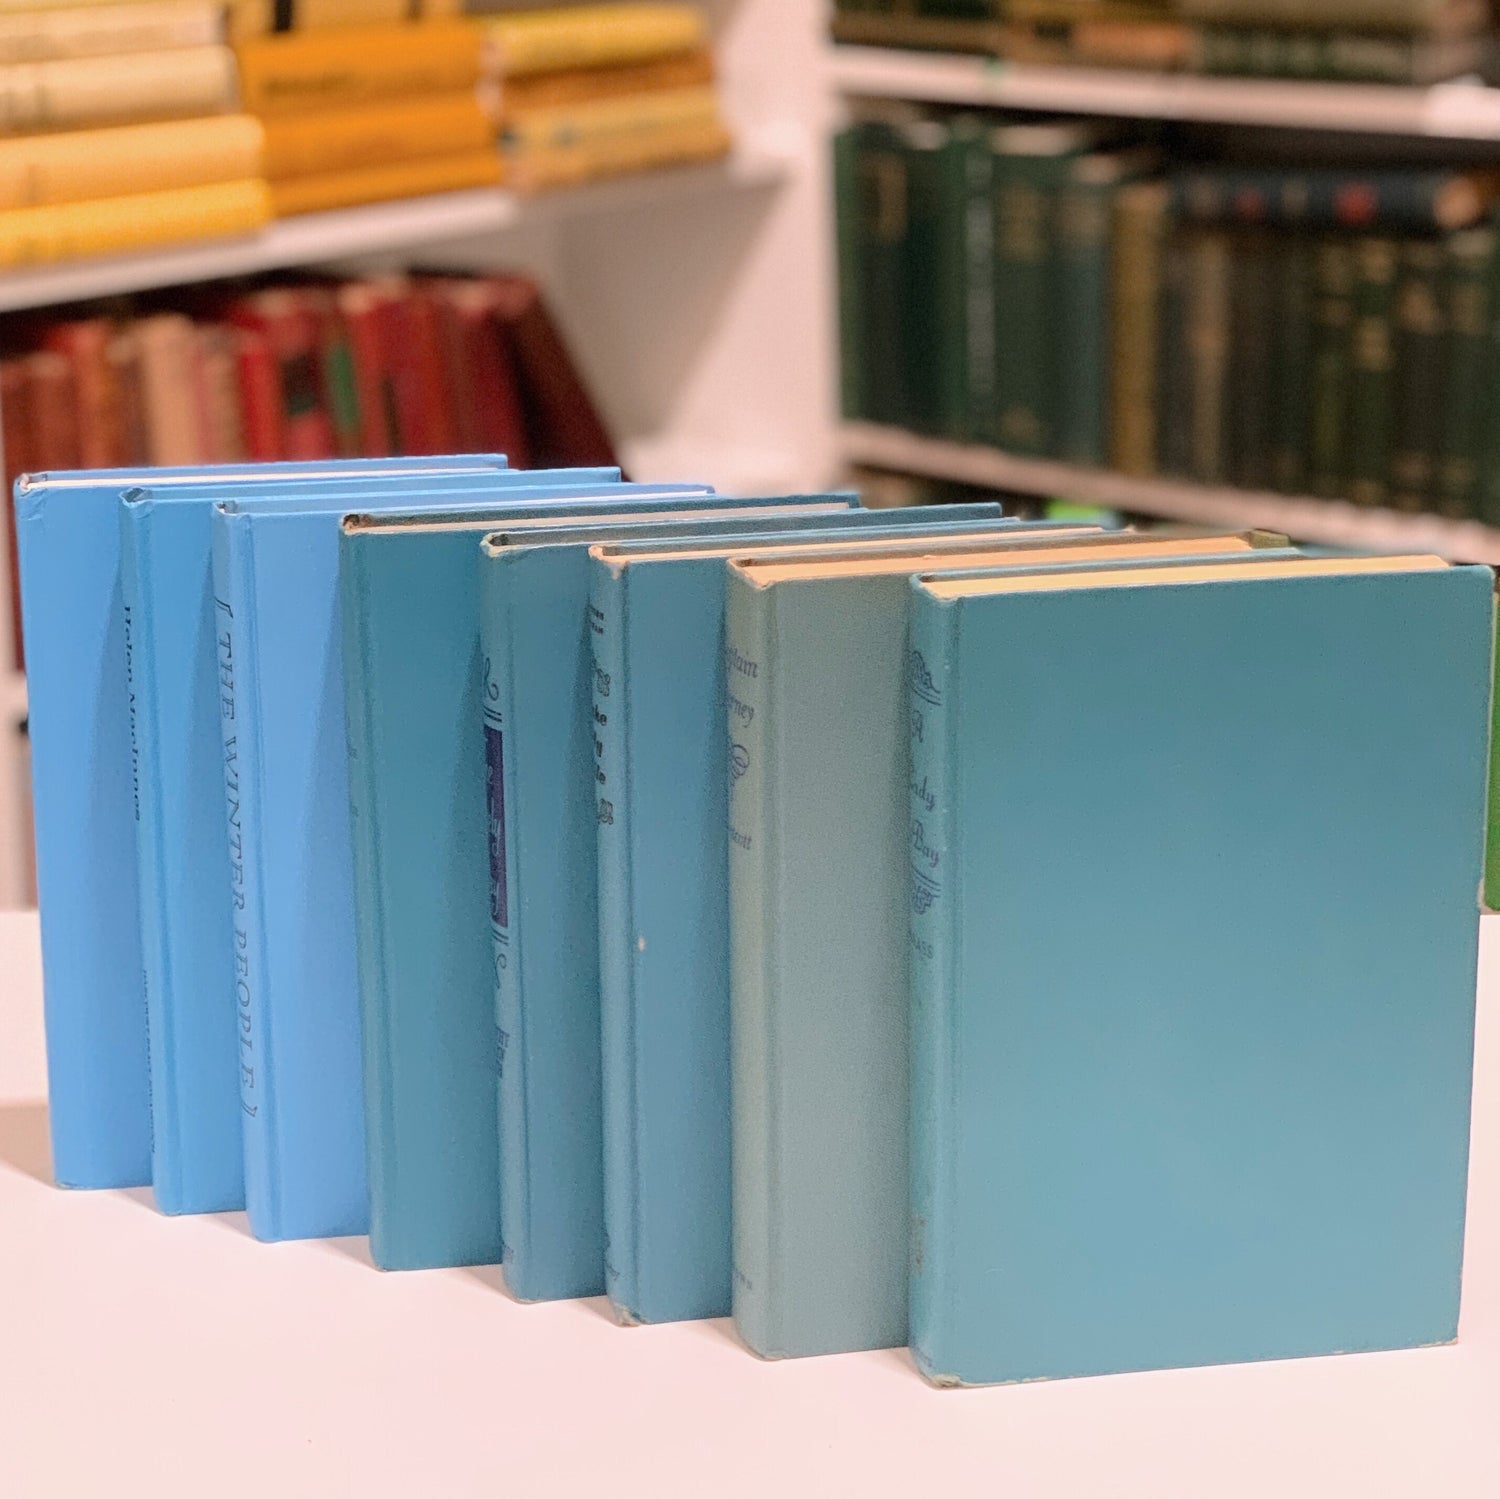 Retro Blue Decorative Books for Display, 1960s Bookshelf Decor, Books By Color